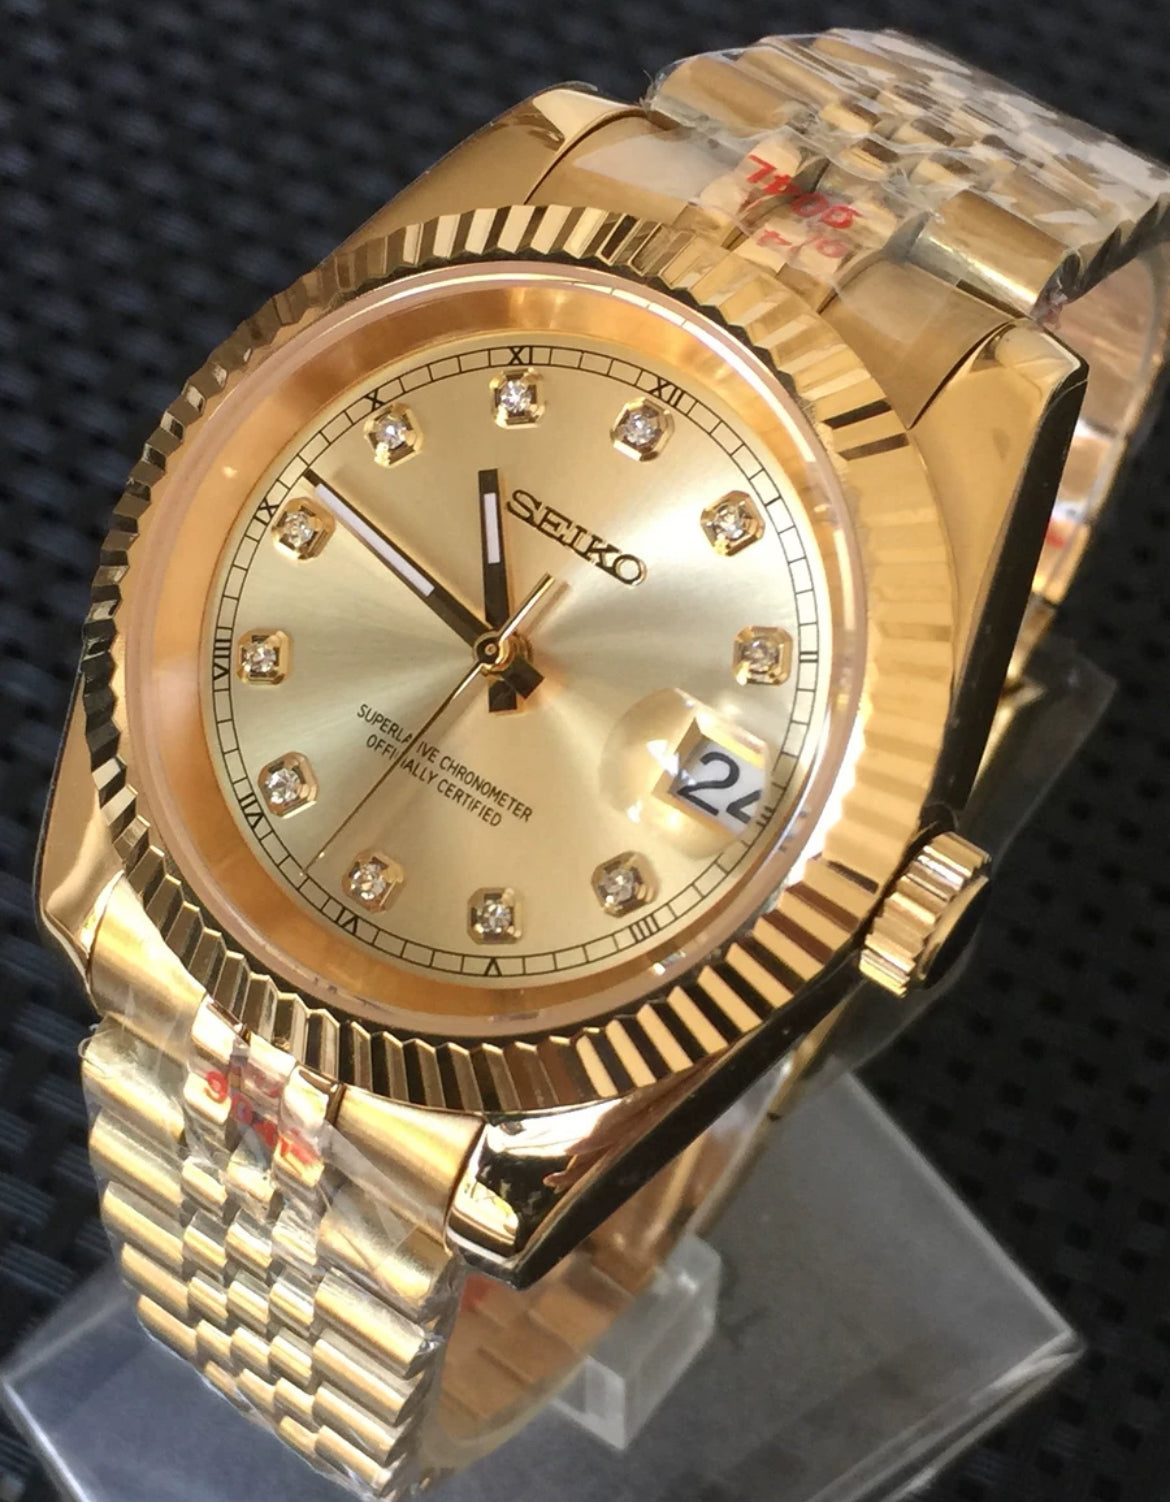 Seiko datejust mod - gold diamond style dial automatic watch with jubilee bracelet